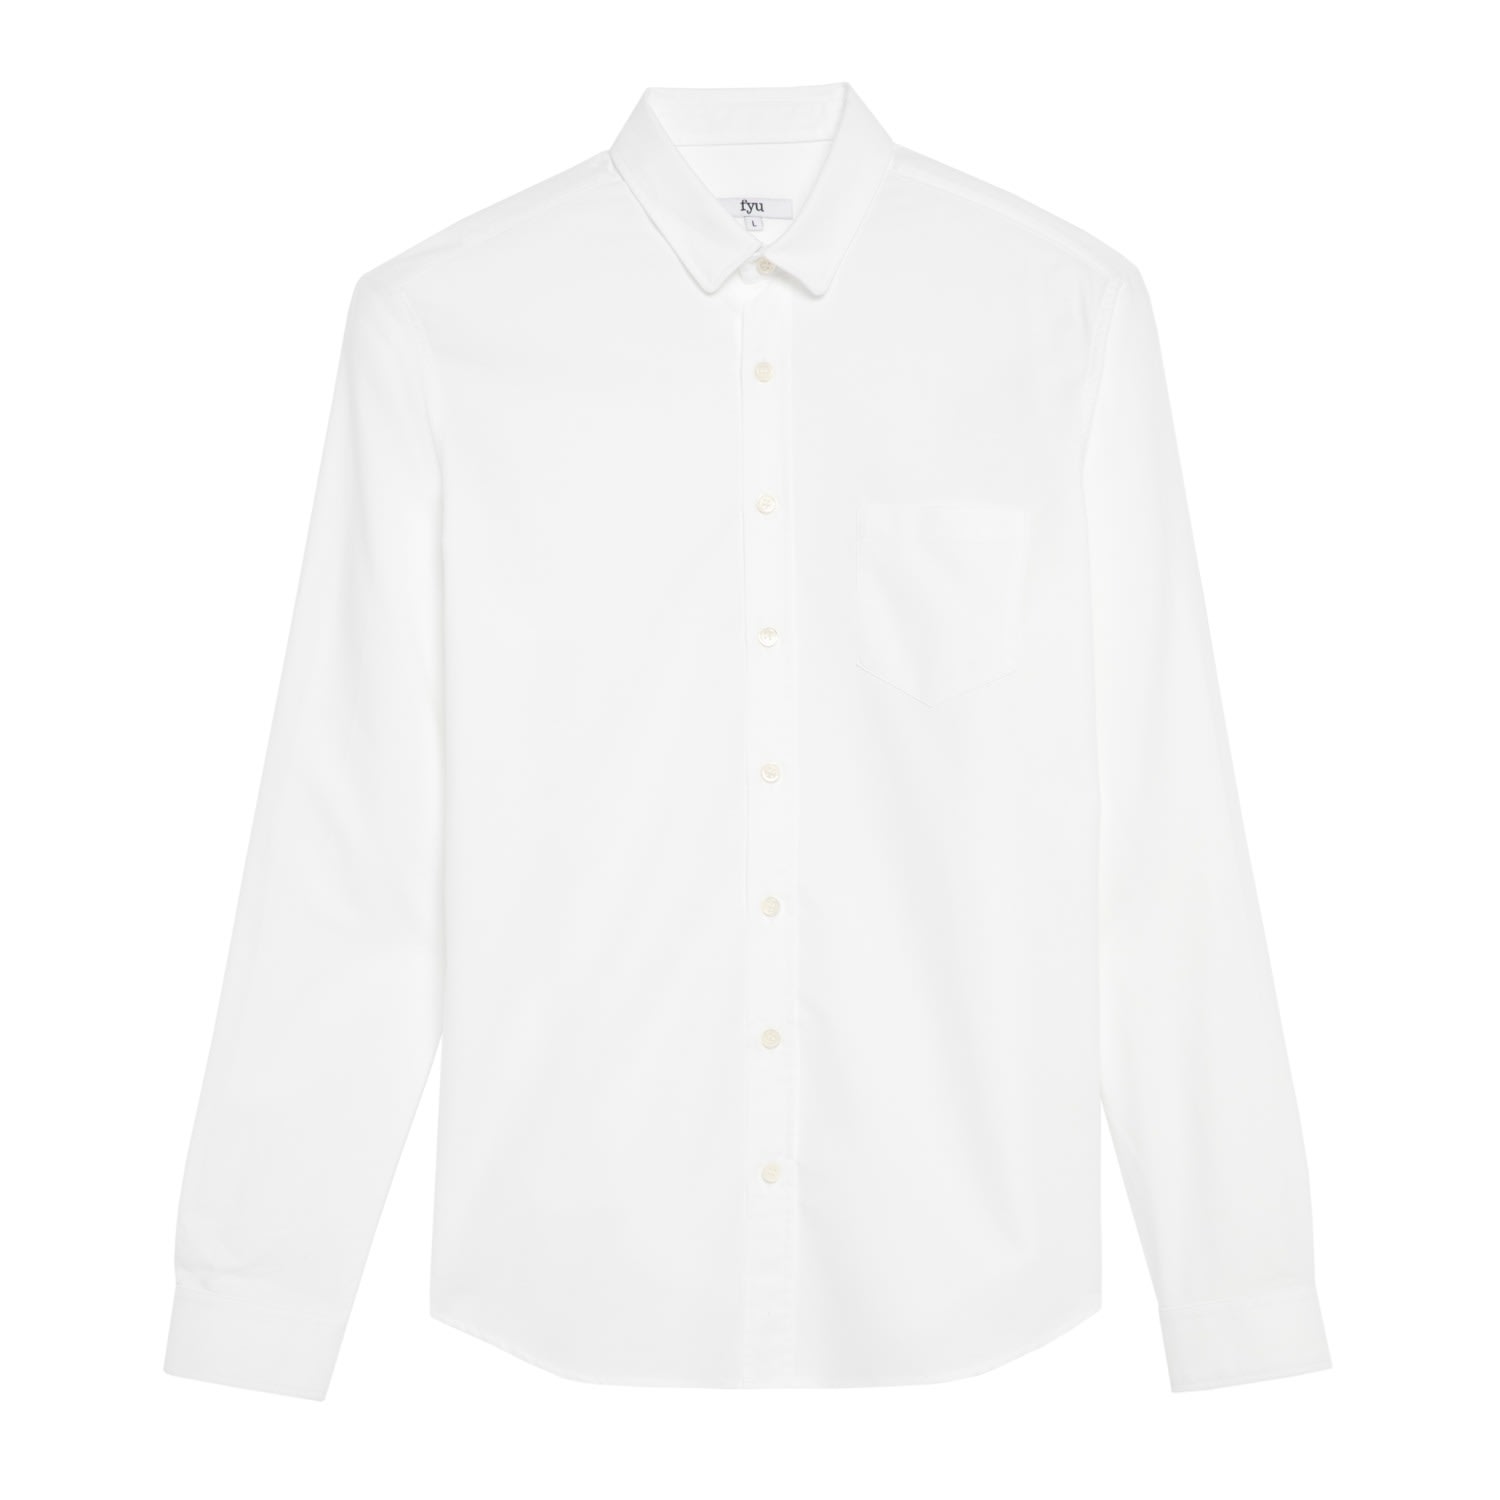 Men's Smith Oxford Shirt - White Medium FYU PARIS